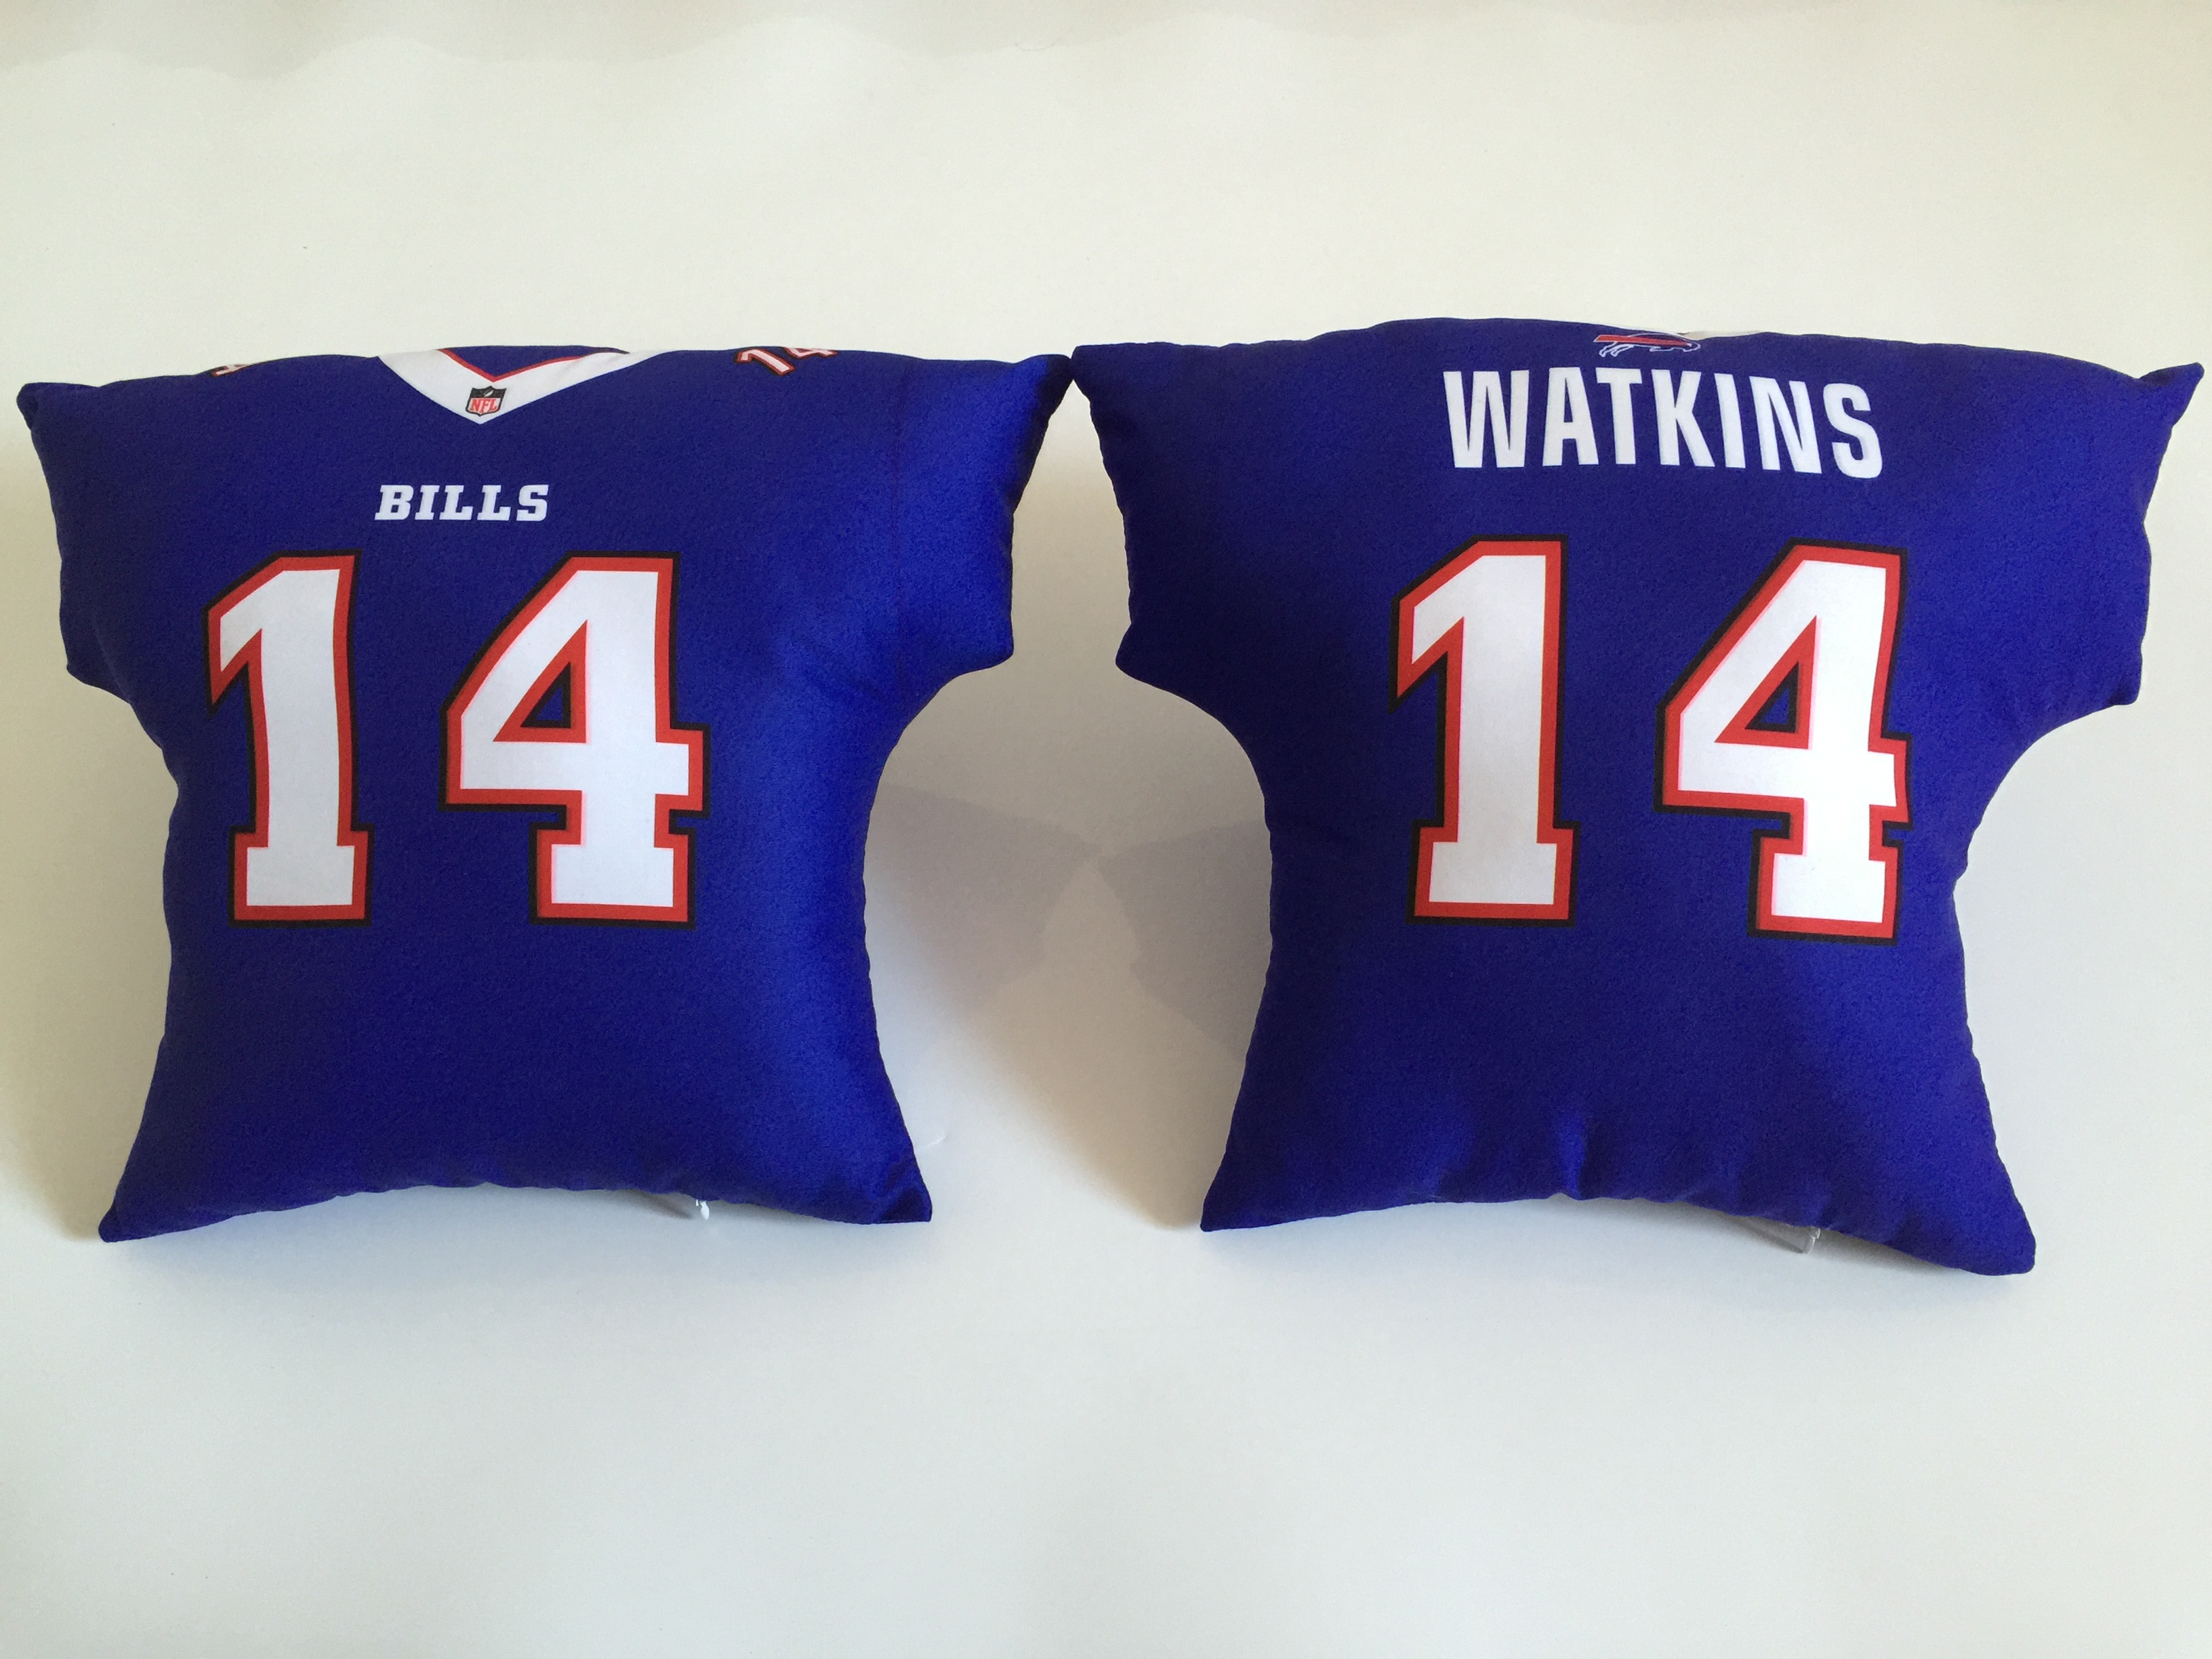 Buffalo Bills 14 Sammy Watkins Royal NFL Pillow